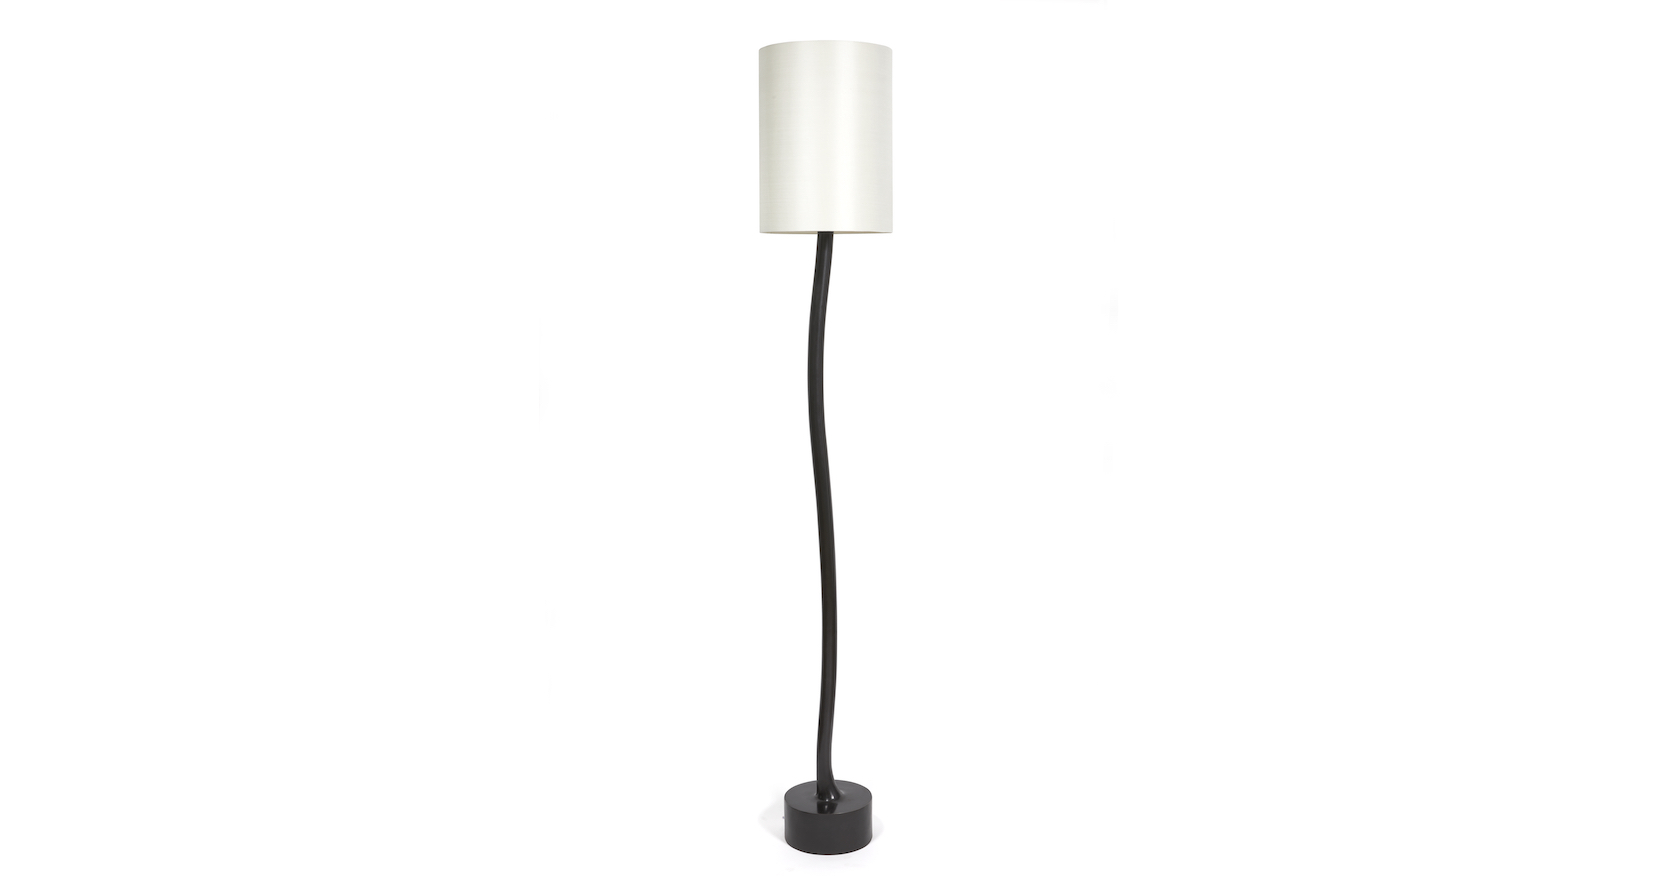 Mattia Bonetti, minimalist floor lamp in black bronze, round base and sinuous stem evoking a snake, white cylindrical lampshade